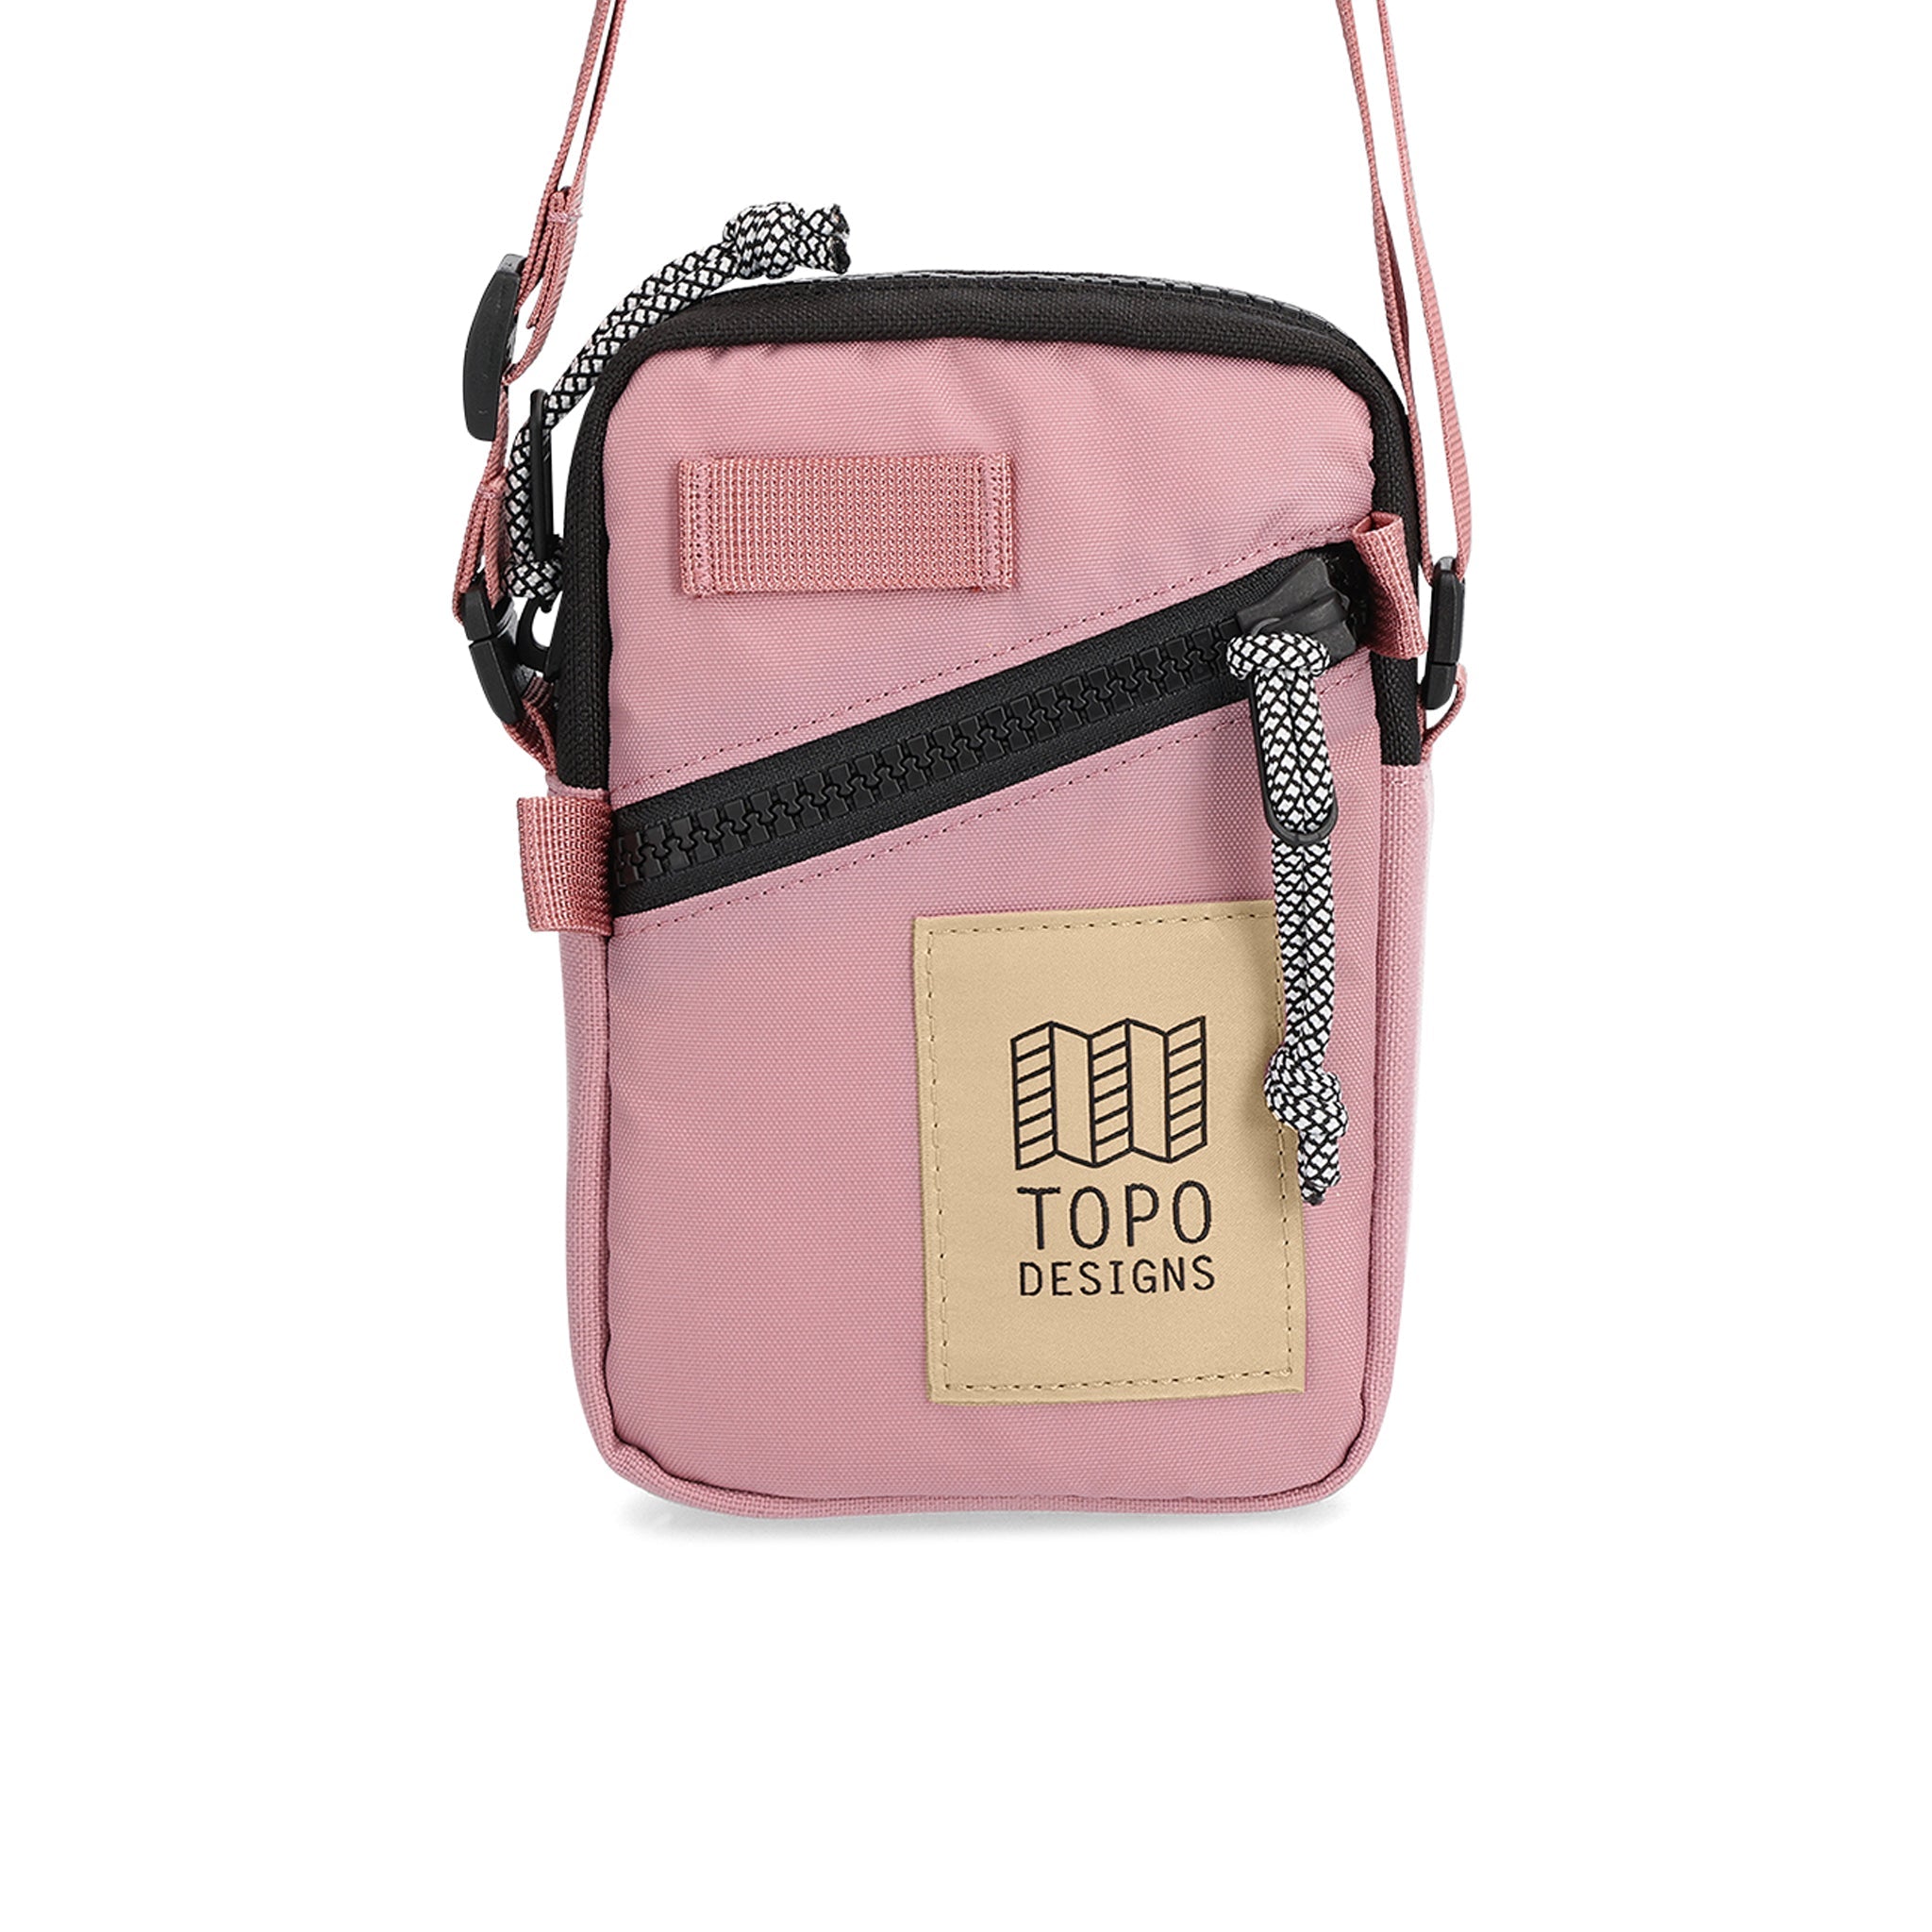 Front View of Topo Designs Mini Shoulder Bag in "Rose"